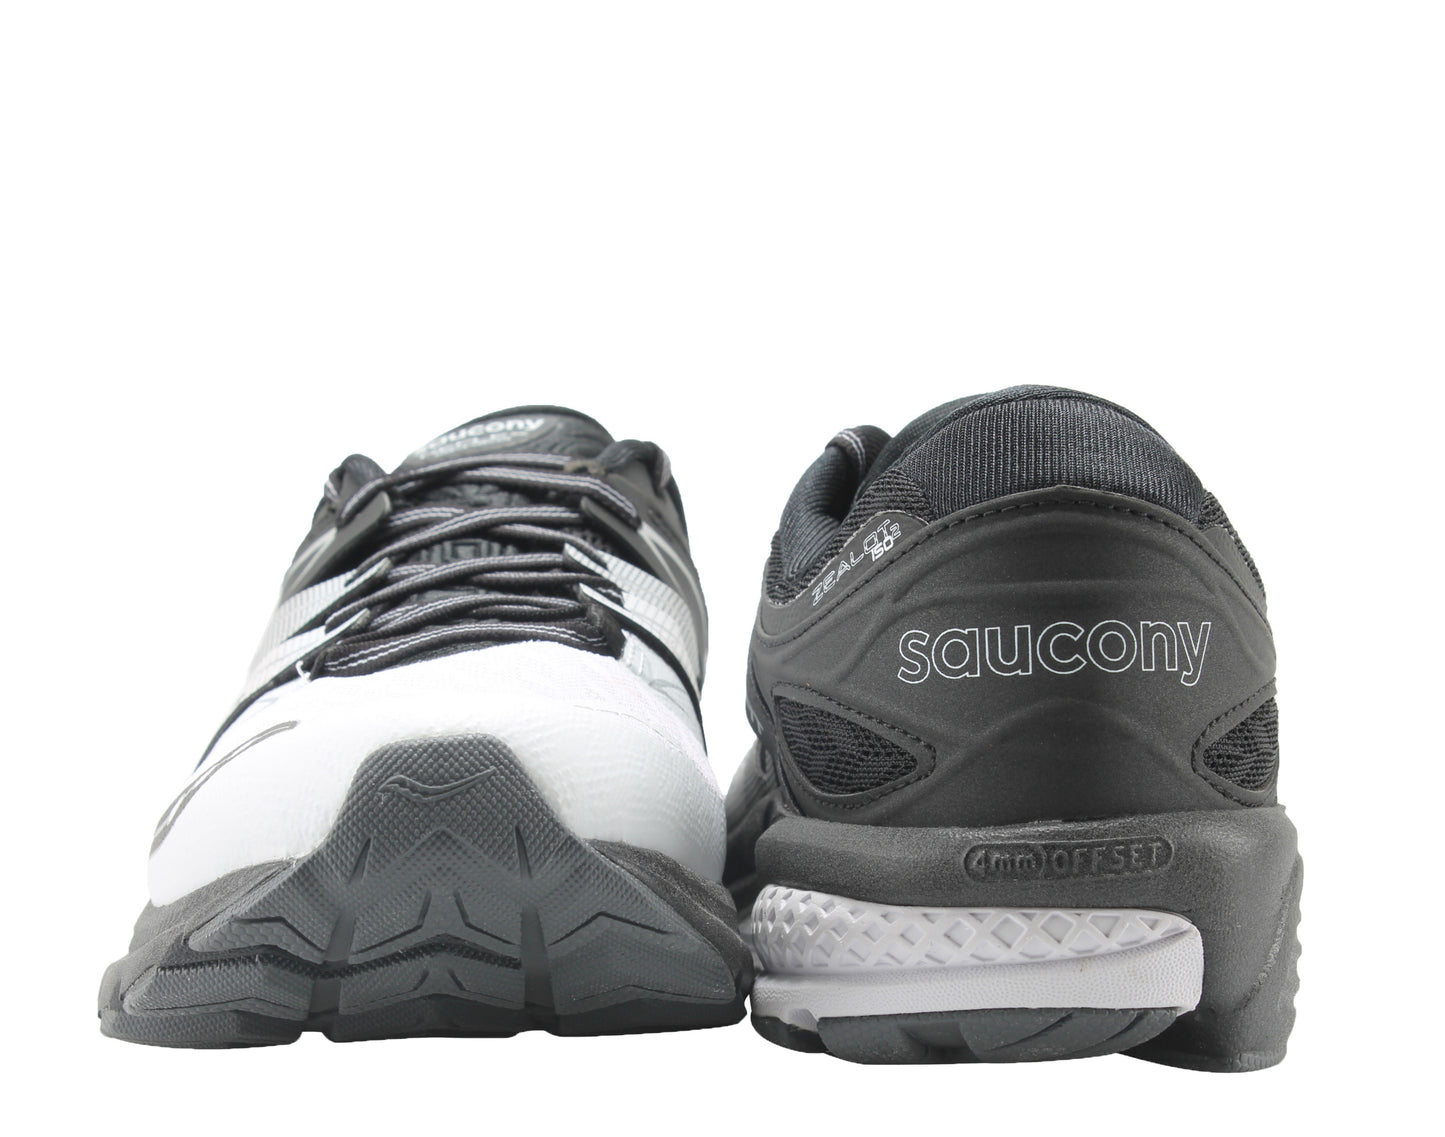 Saucony Zealot ISO 2 White/Black/Silver Men's Running Shoes S20332-1